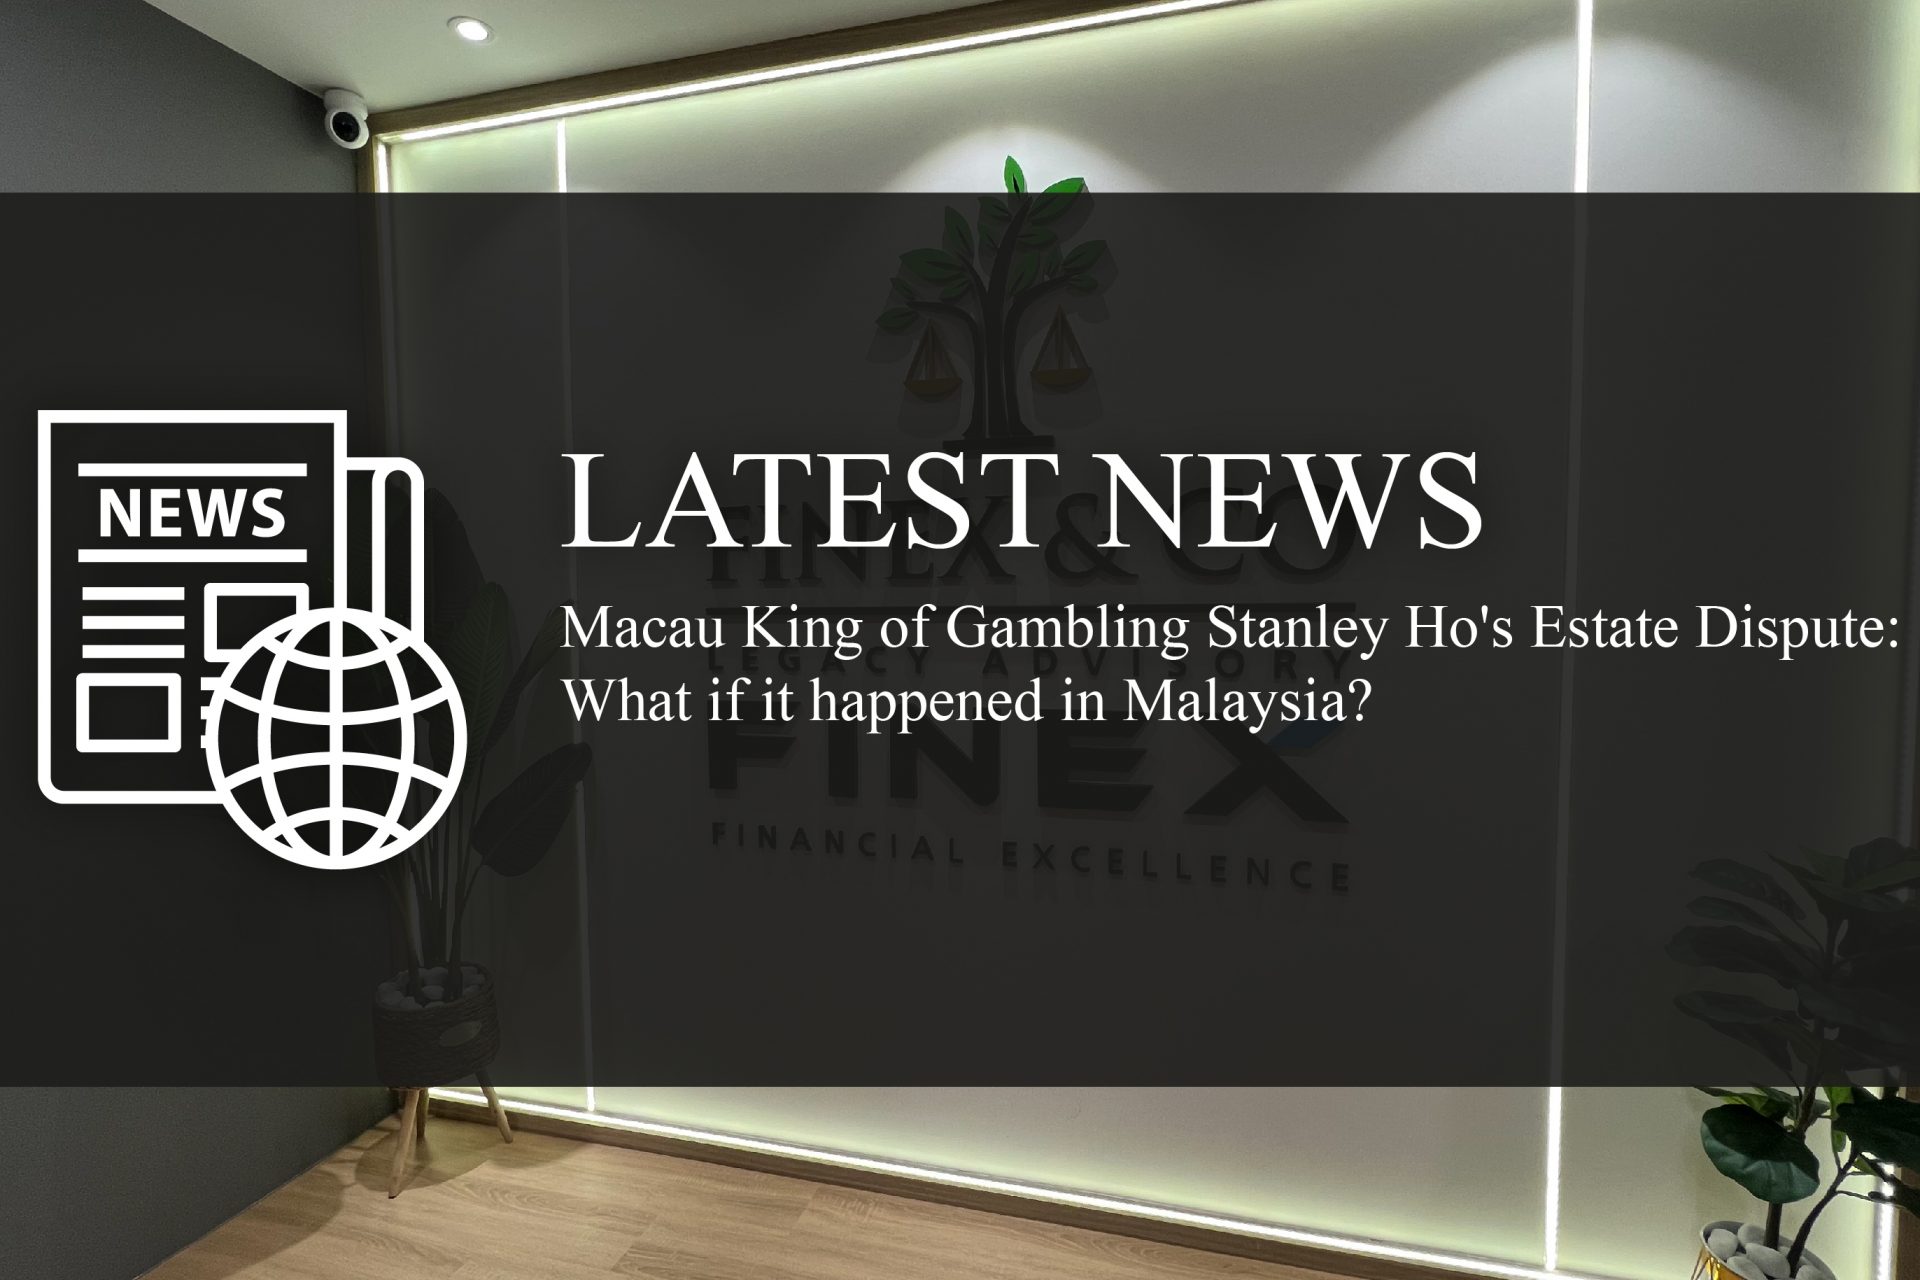 Macau King of Gambling Stanley Ho’s Estate Dispute: What if it happened in Malaysia?